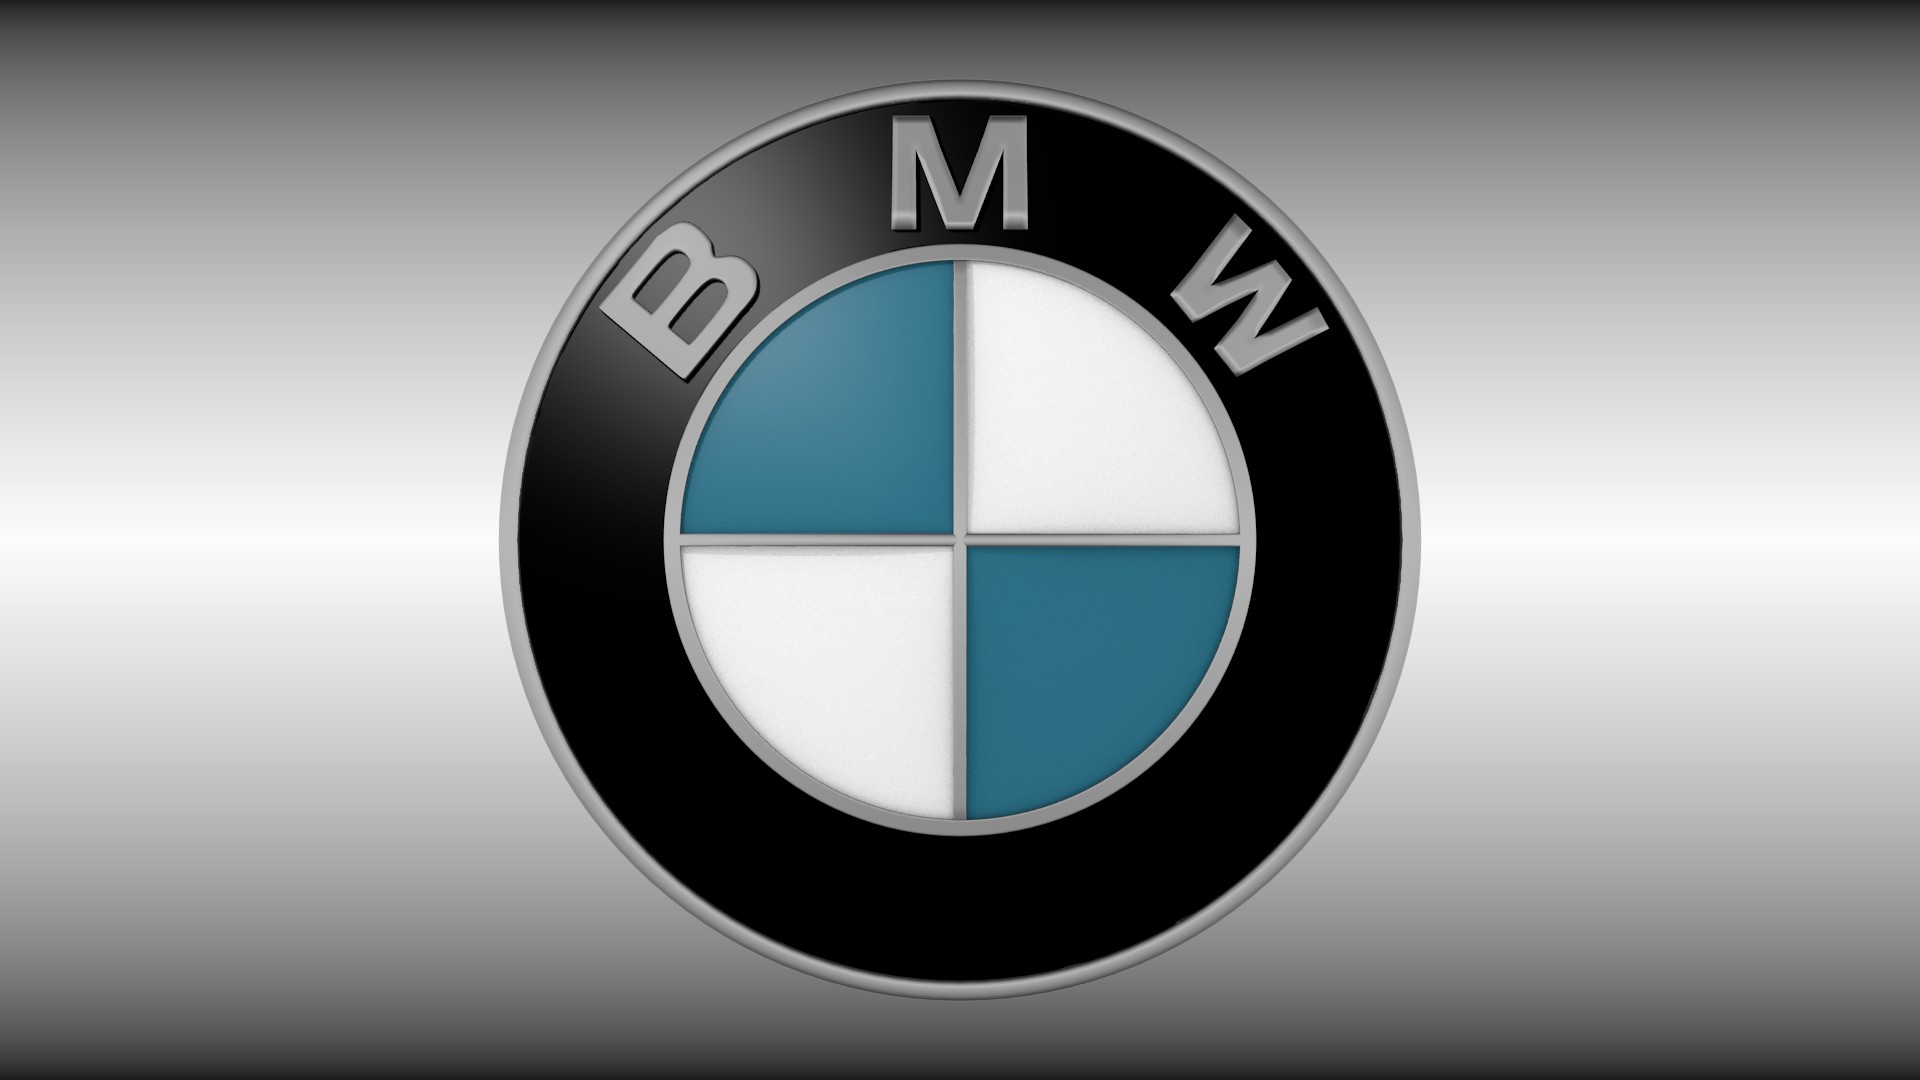 Bmw Logo HD Image Desktop Wallpaper Pictures